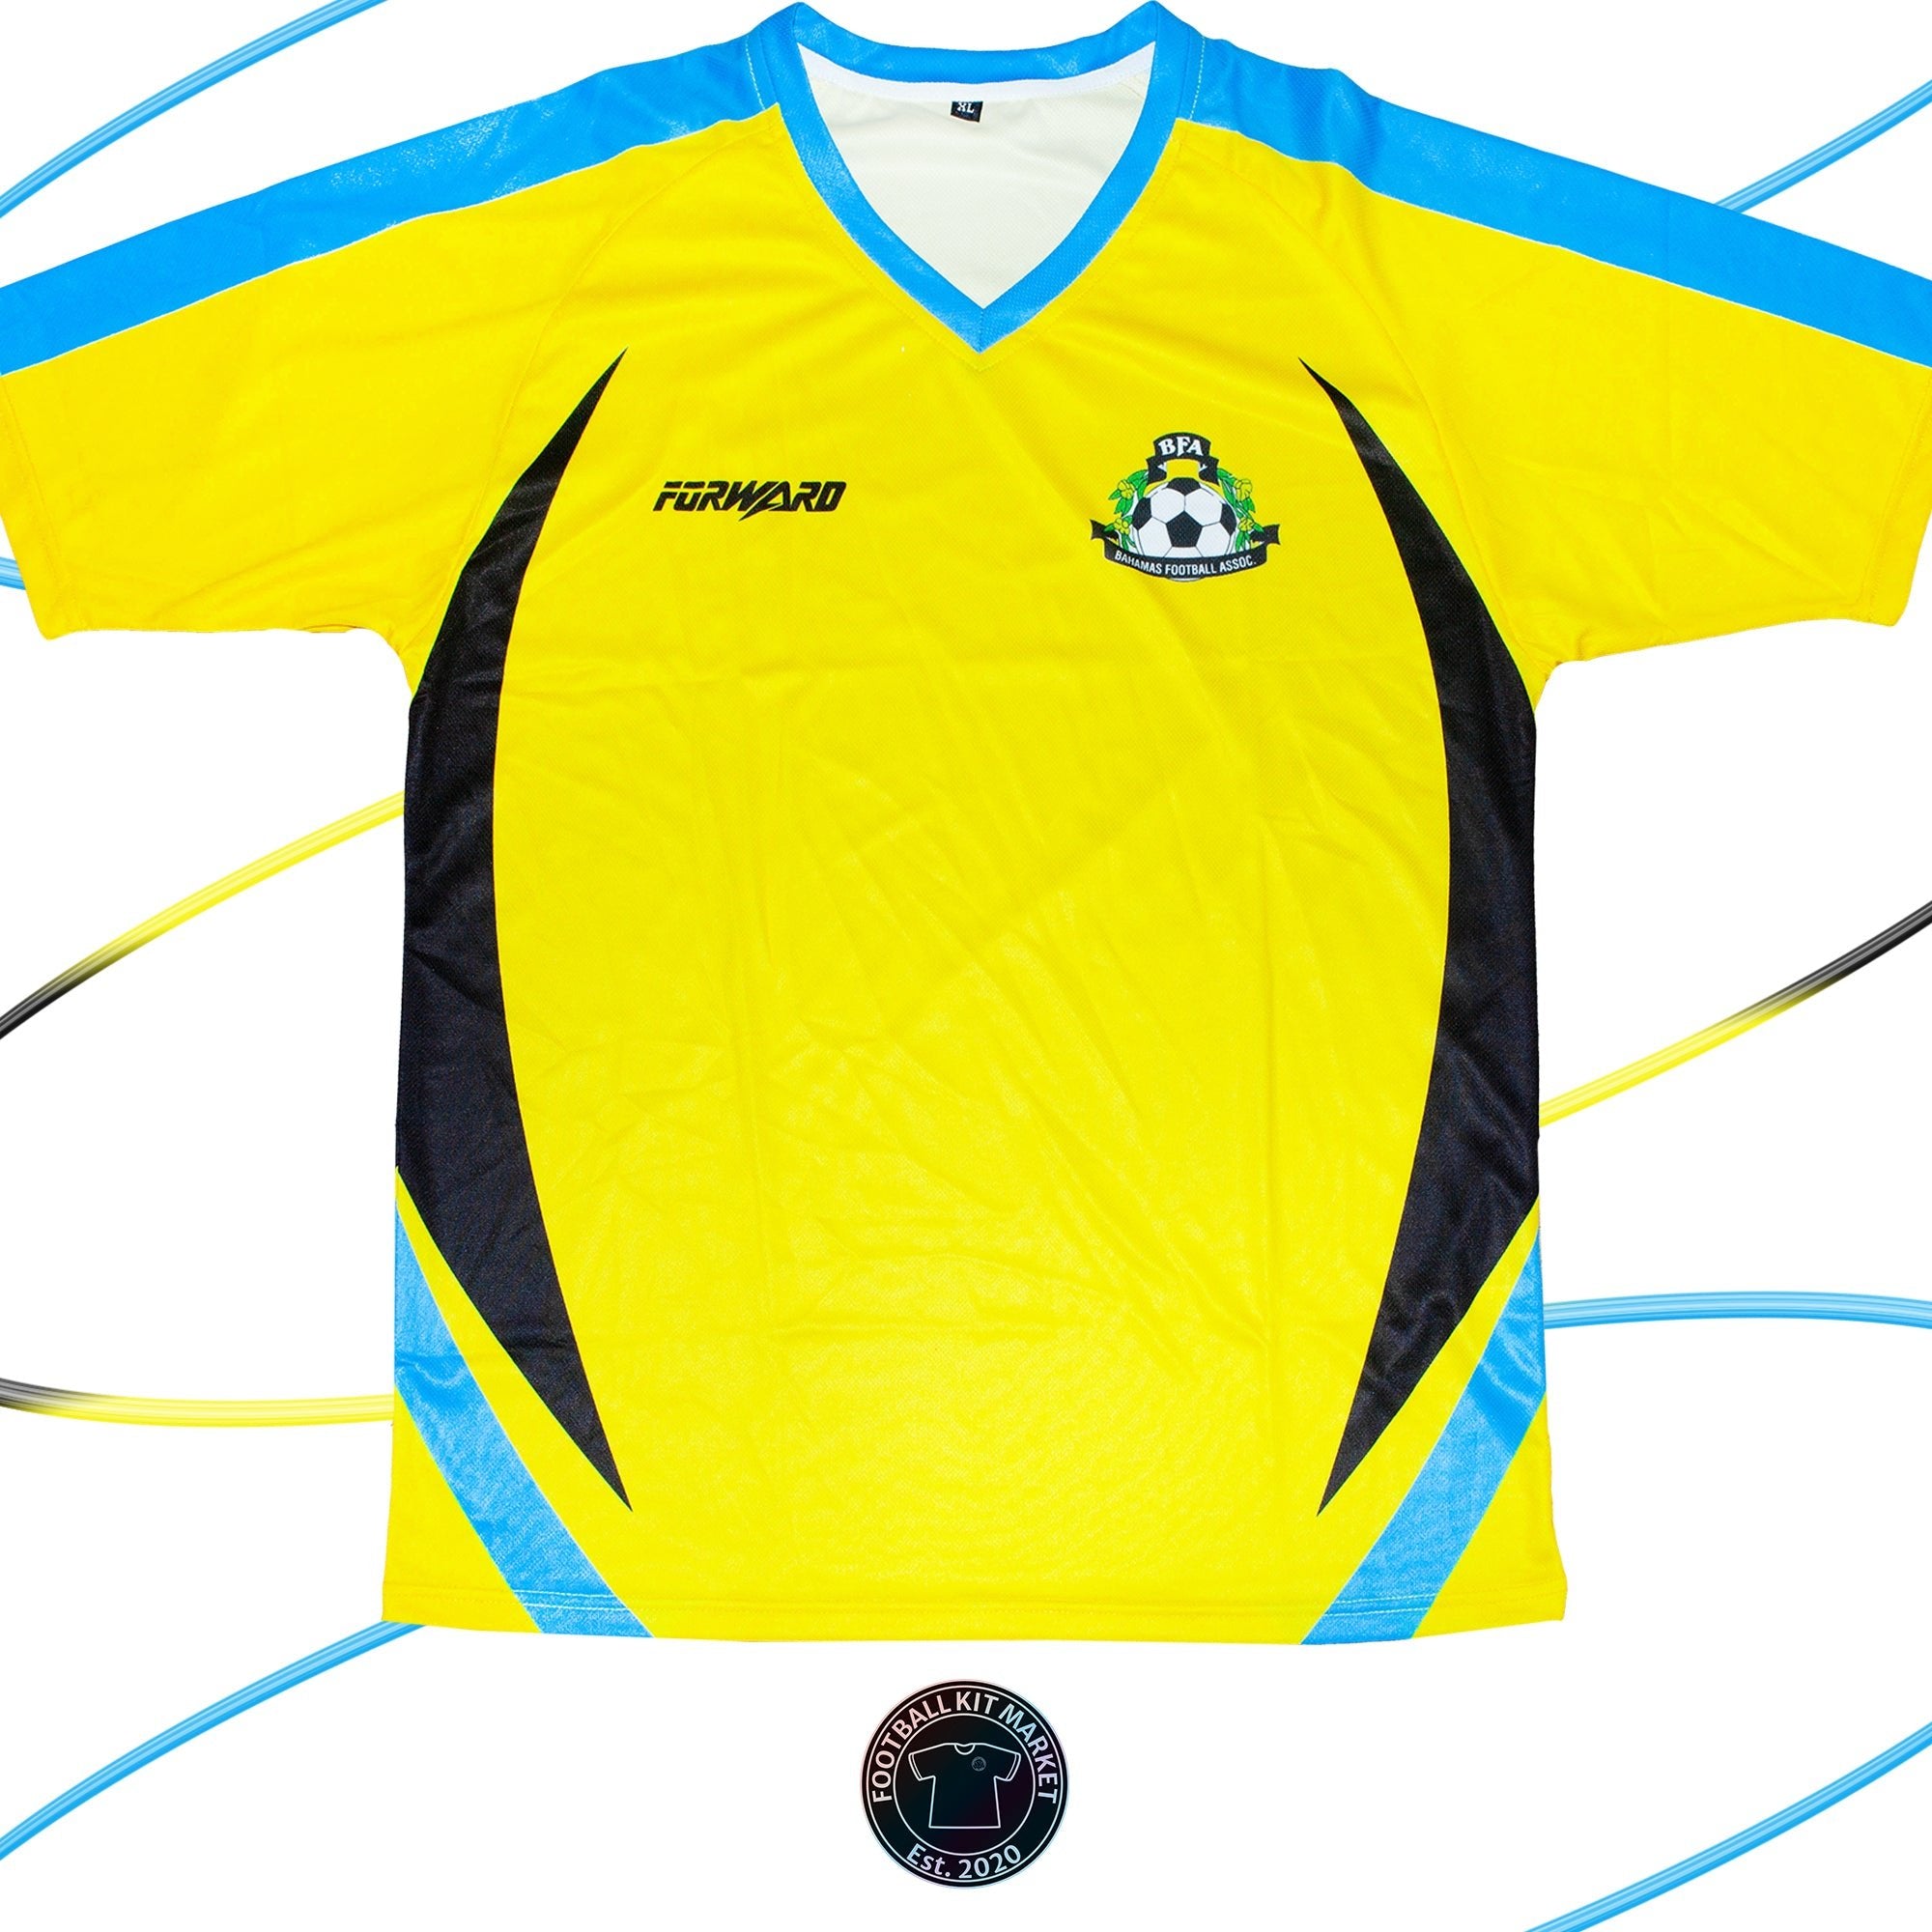 Genuine BAHAMAS Home (2014-2015) - FORWARD (XL) - Product Image from Football Kit Market